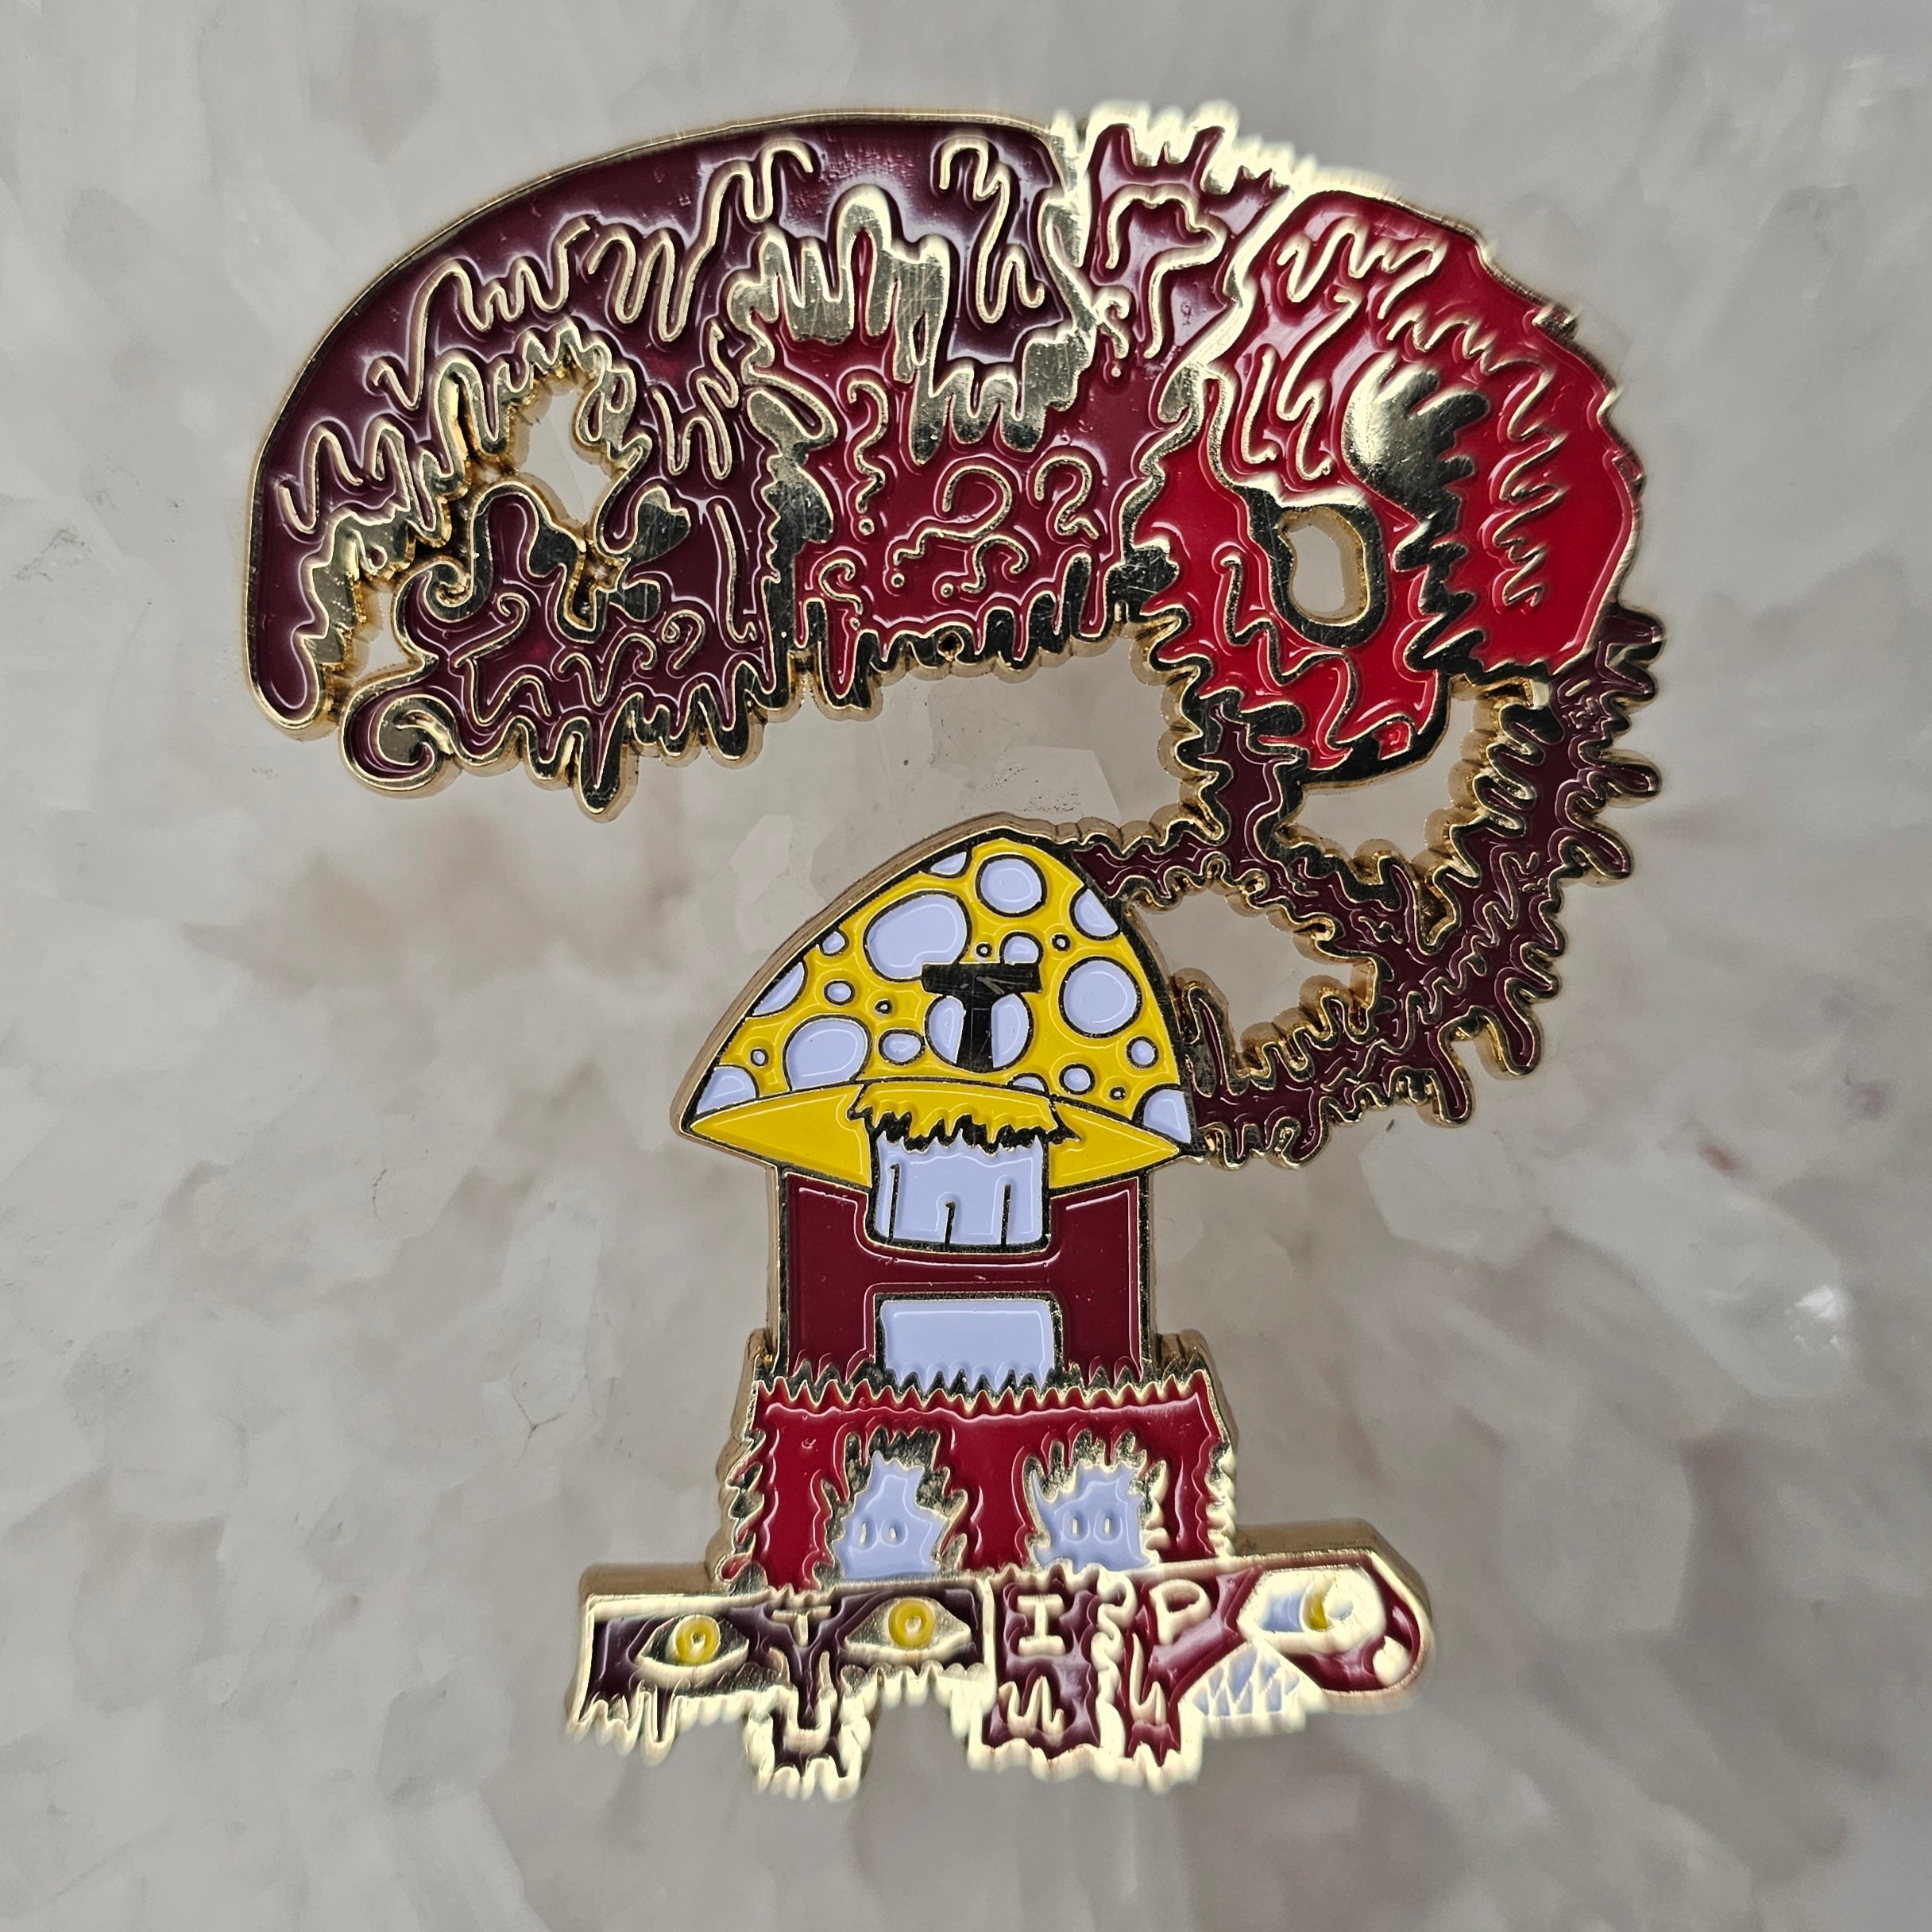 Tipper Mushroom House Edm Dj Dubstep Rave Shroom Enamel Pins Hat Pins Lapel Pin Brooch Badge Festival Pin